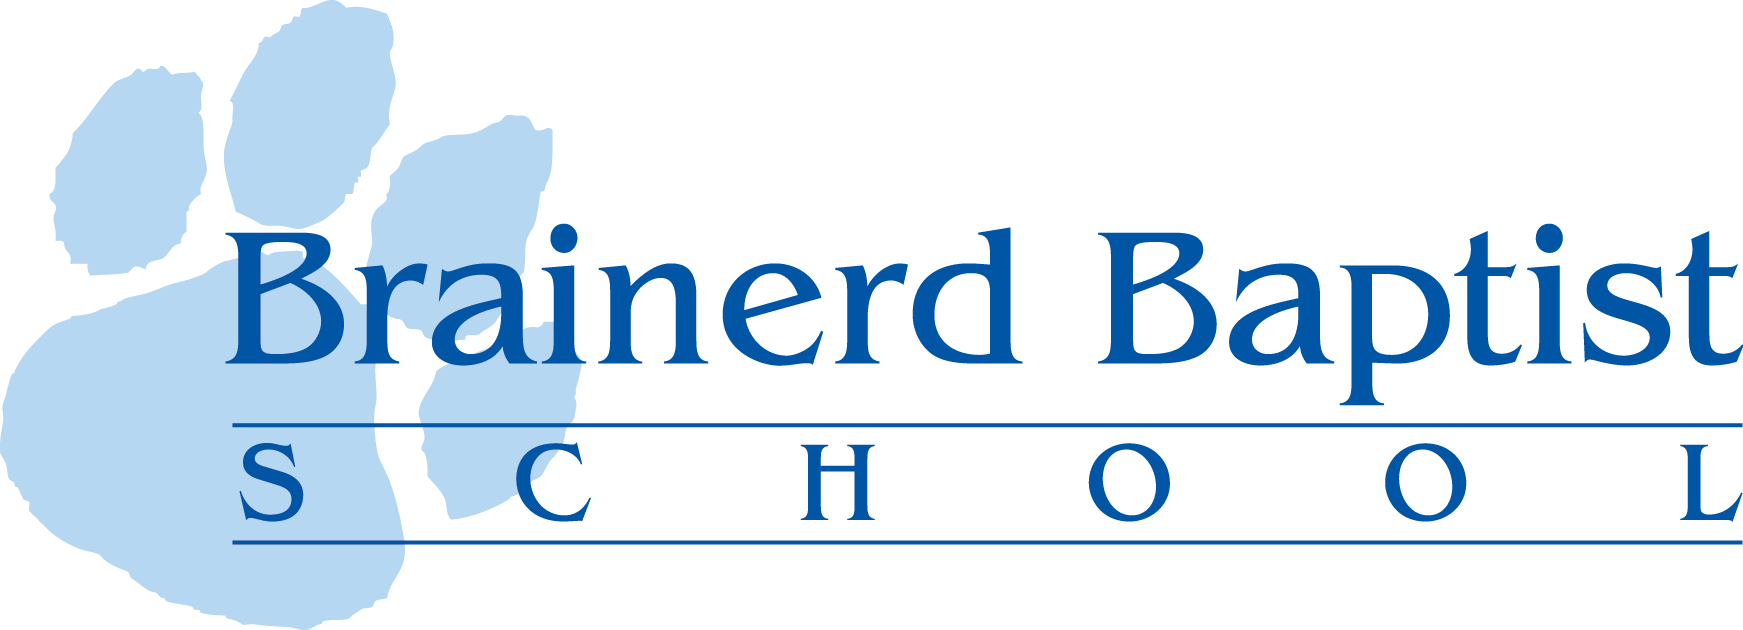 Brainerd Baptist School Request Information